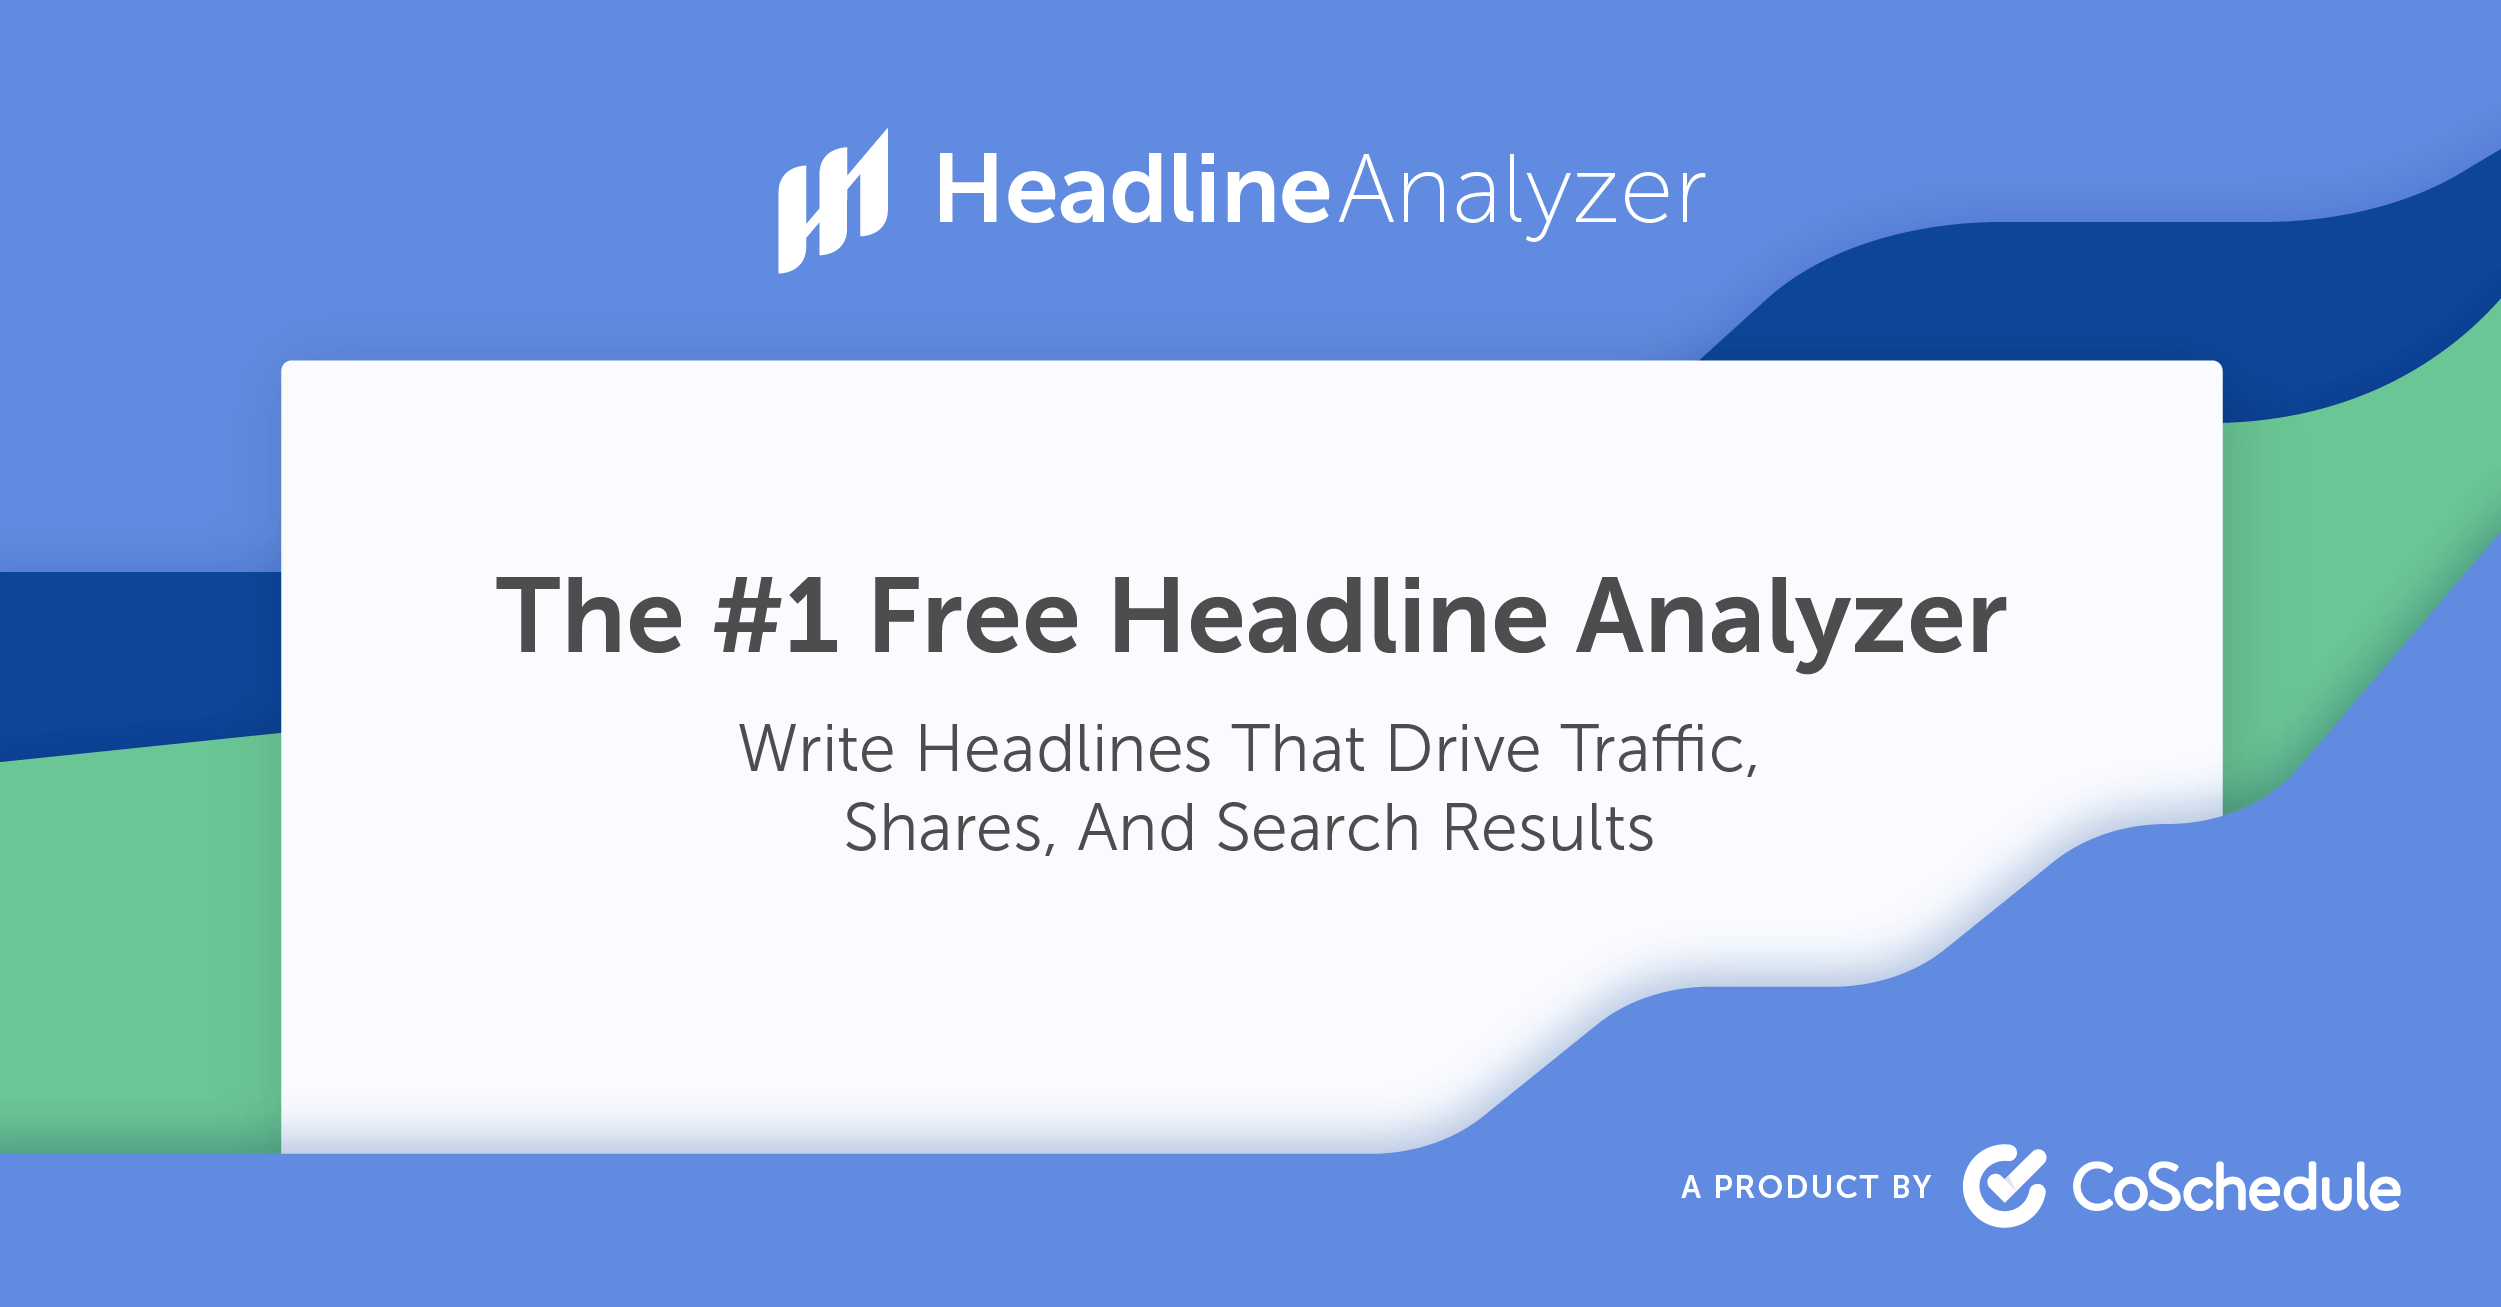 Write Better Headlines: Headline Analyzer From CoSchedule - @CoSchedule